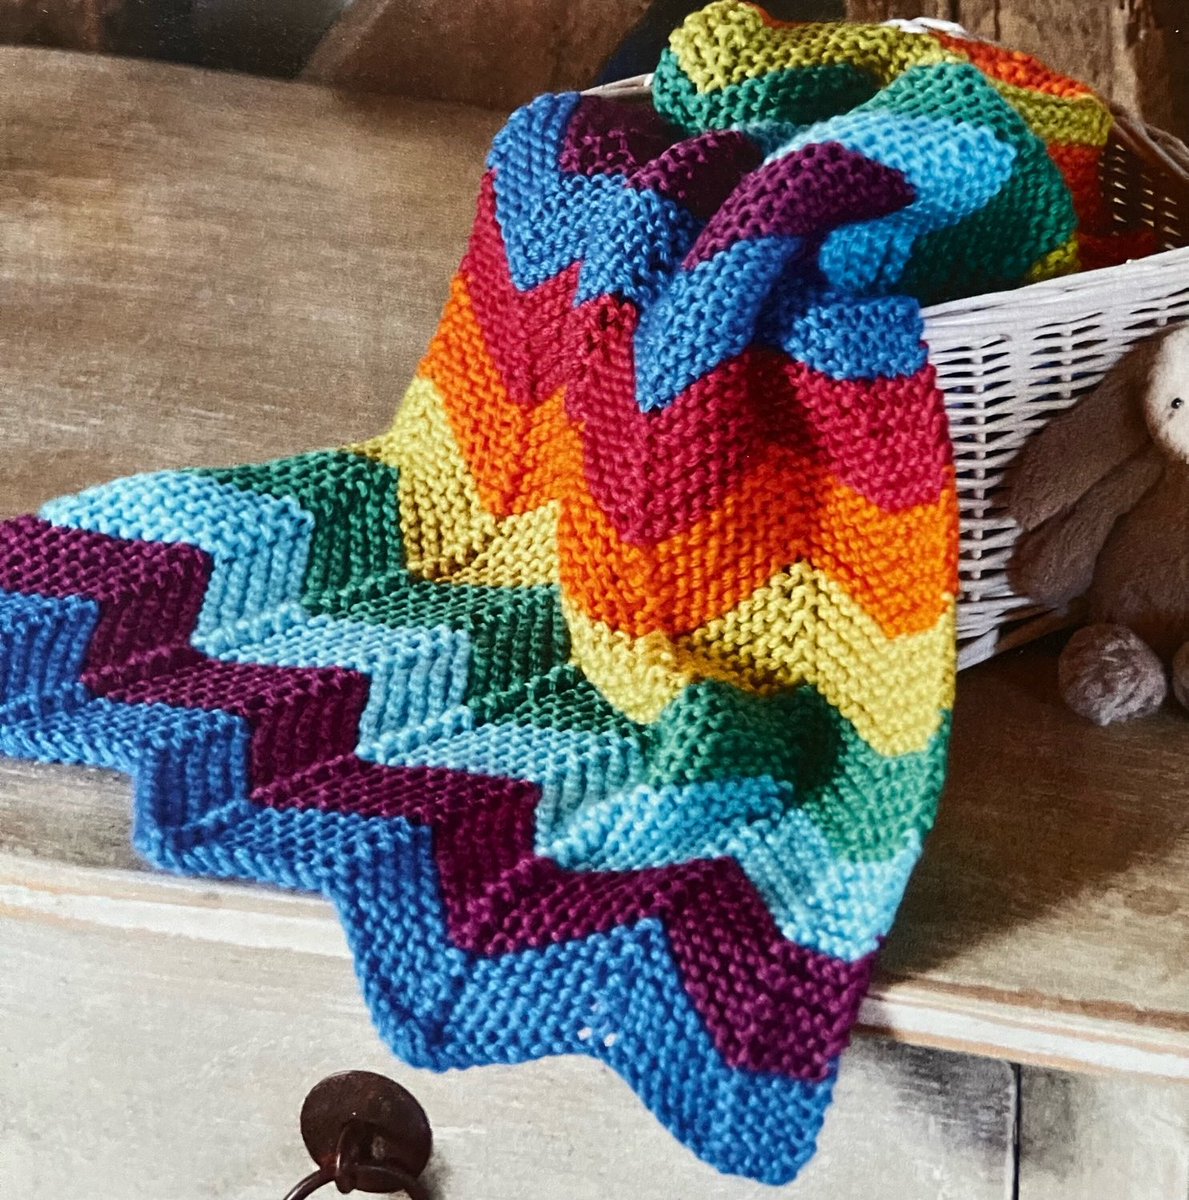 Knitted Chevron Rainbow Blanket Pattern #chevronrainbow #rugmaking #chevrons #rainbows #ssb #MHHSBD #earlybiz #sundaycrafts #rainbowblanket #knit #knittedblanket #knitting #knittingpattern etsy.me/3pu1KHa